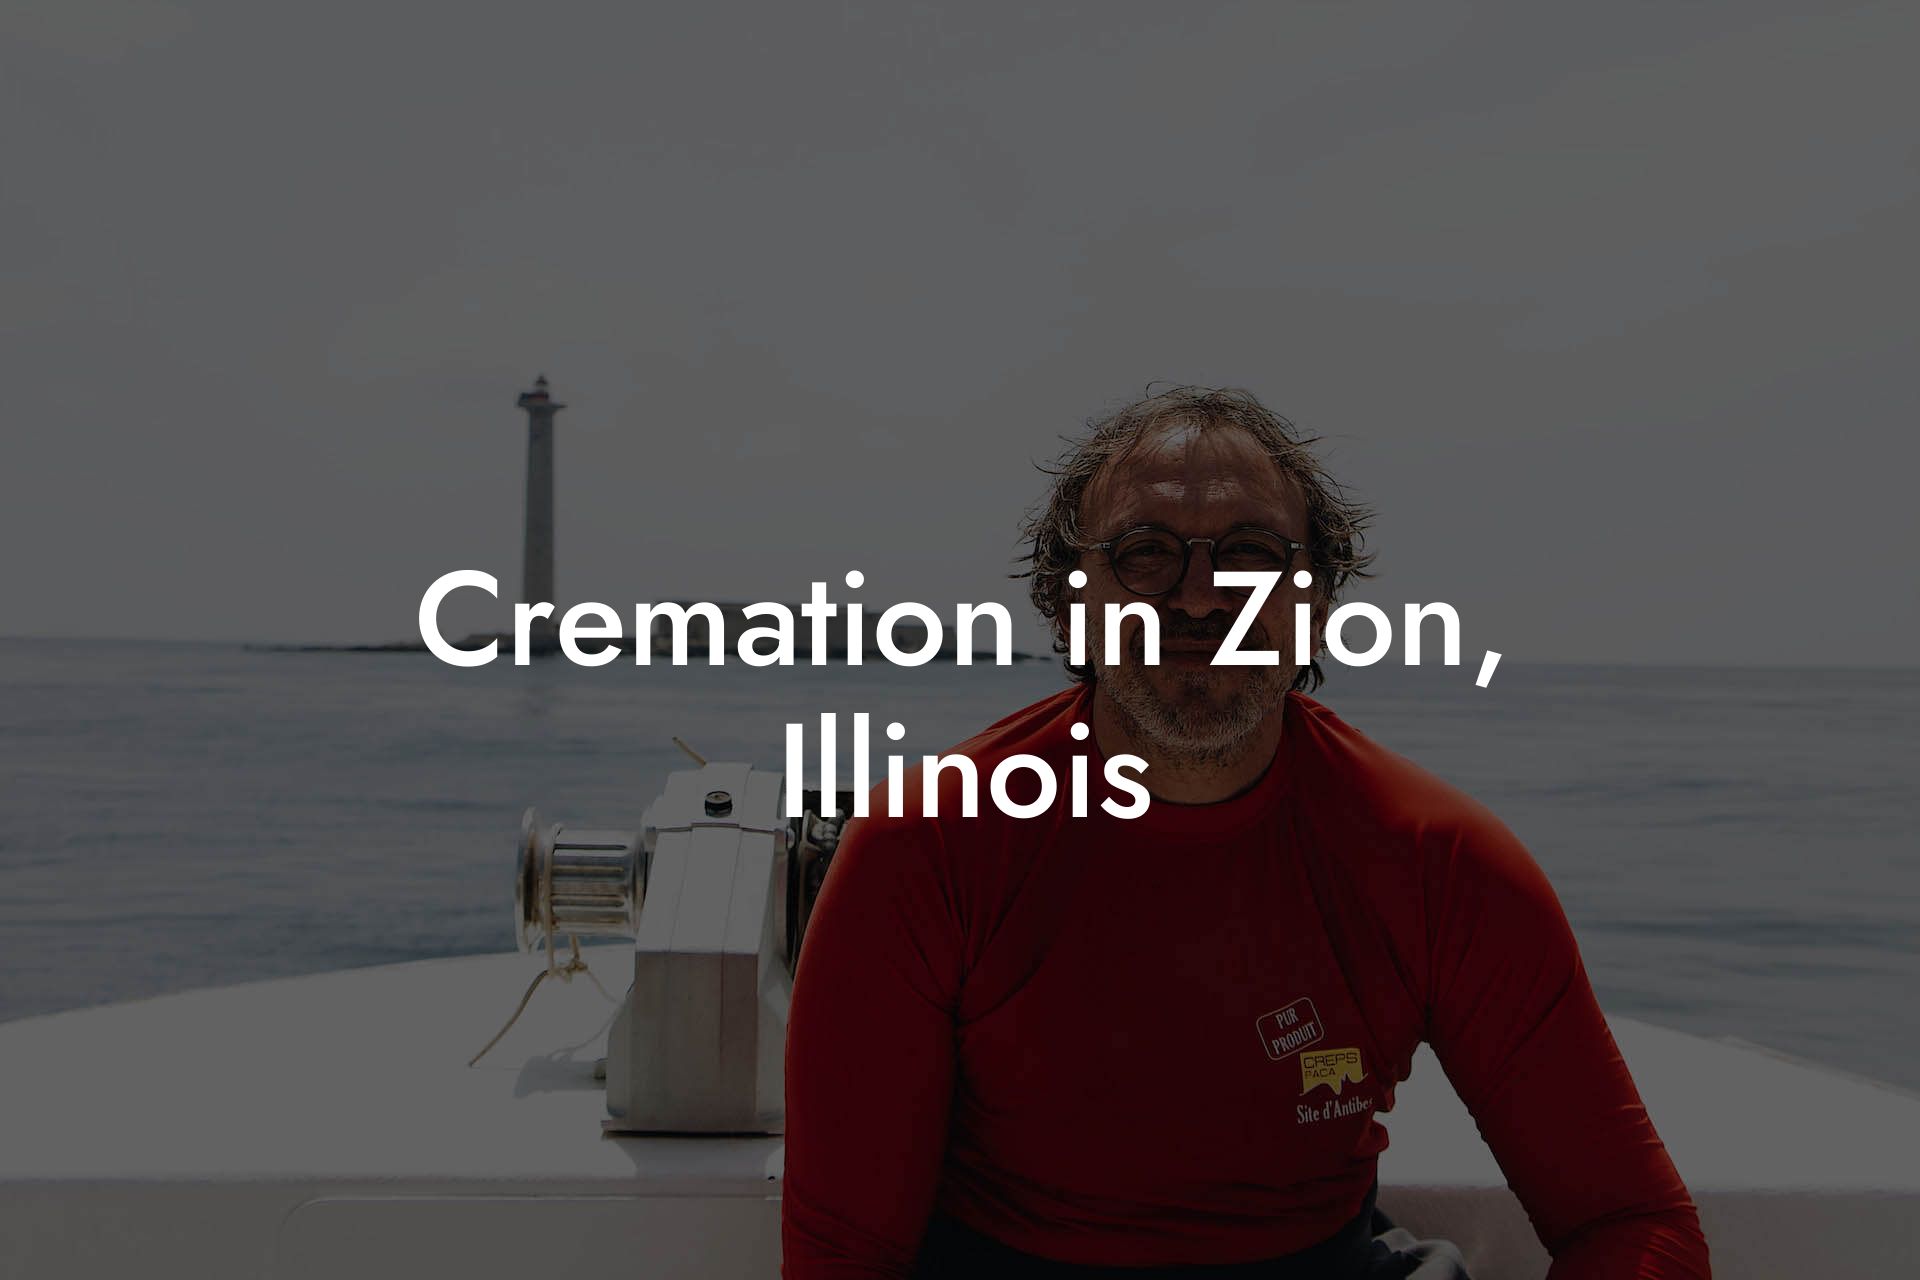 Cremation in Zion, Illinois